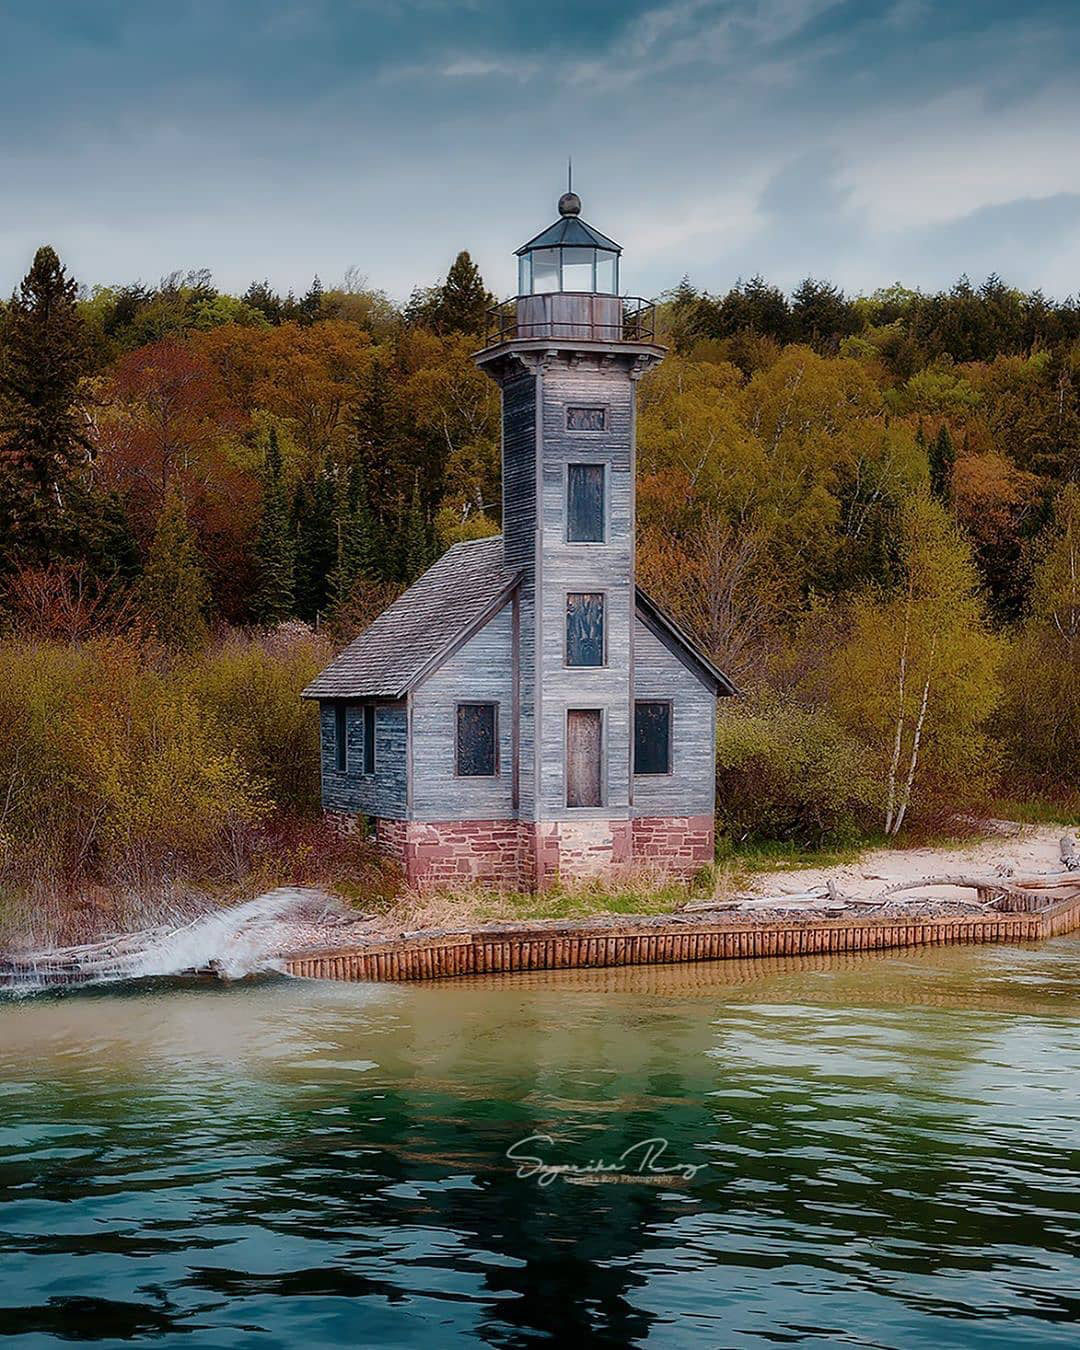 The East Channel Lighthouse. PC: Instagram user @sagarika_roy